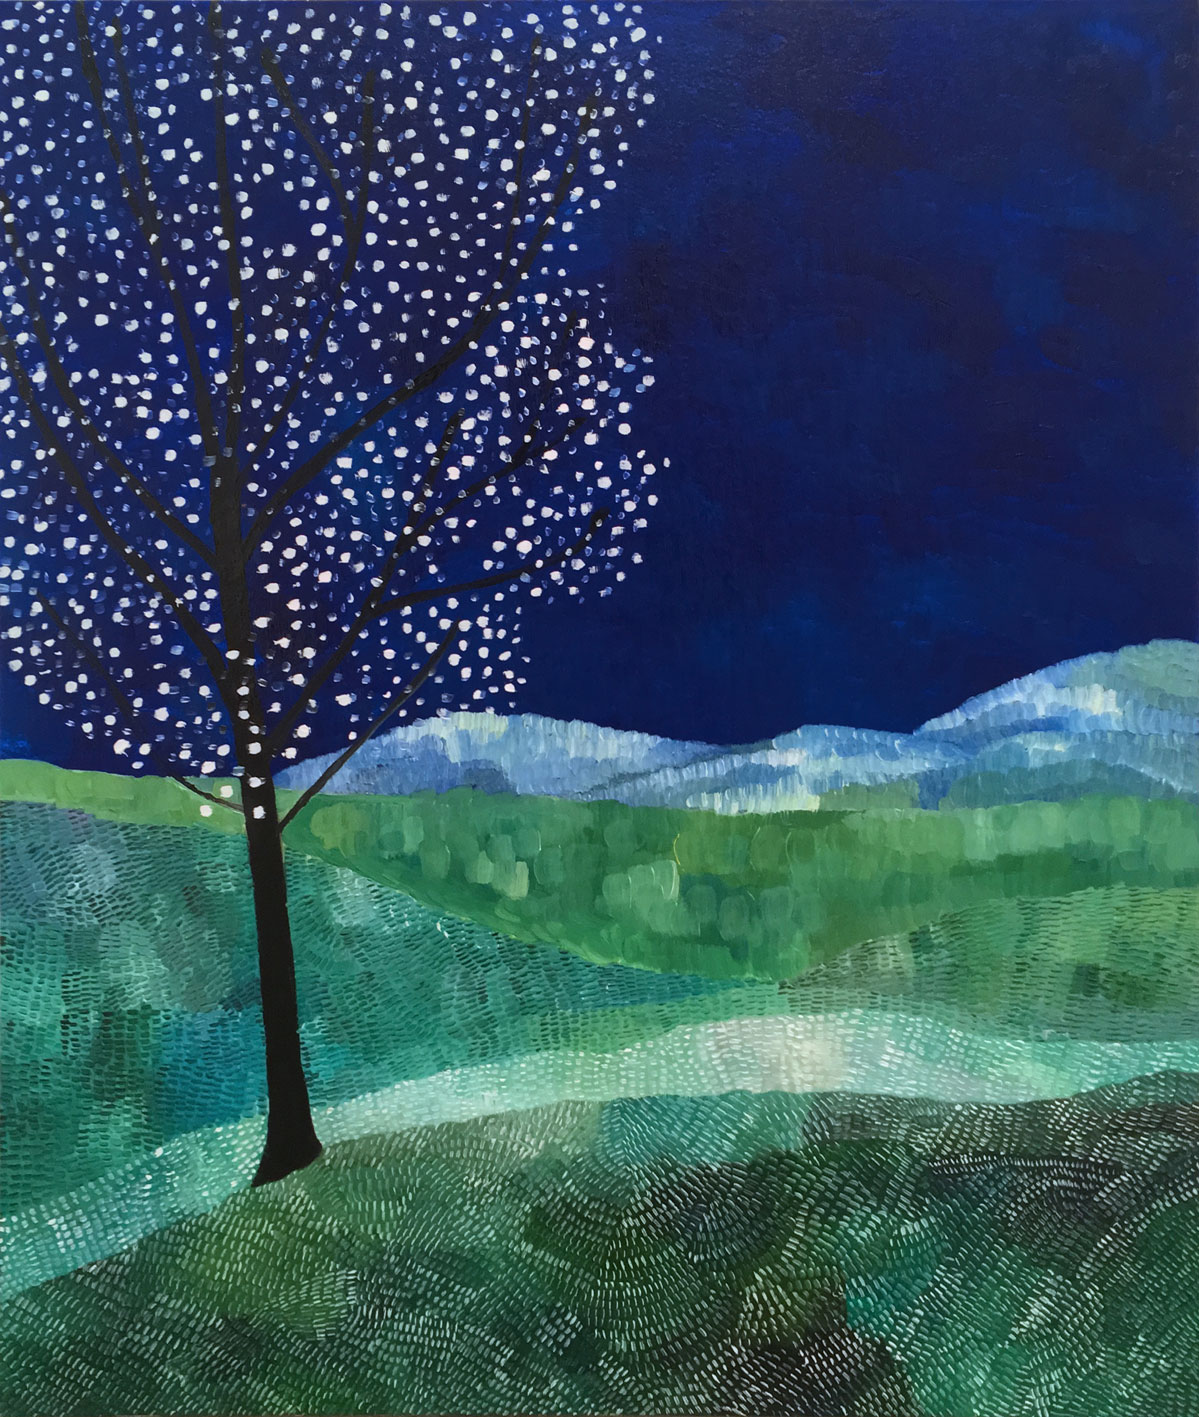 Sally-Ross-Night-Tree-2017-650x550cm